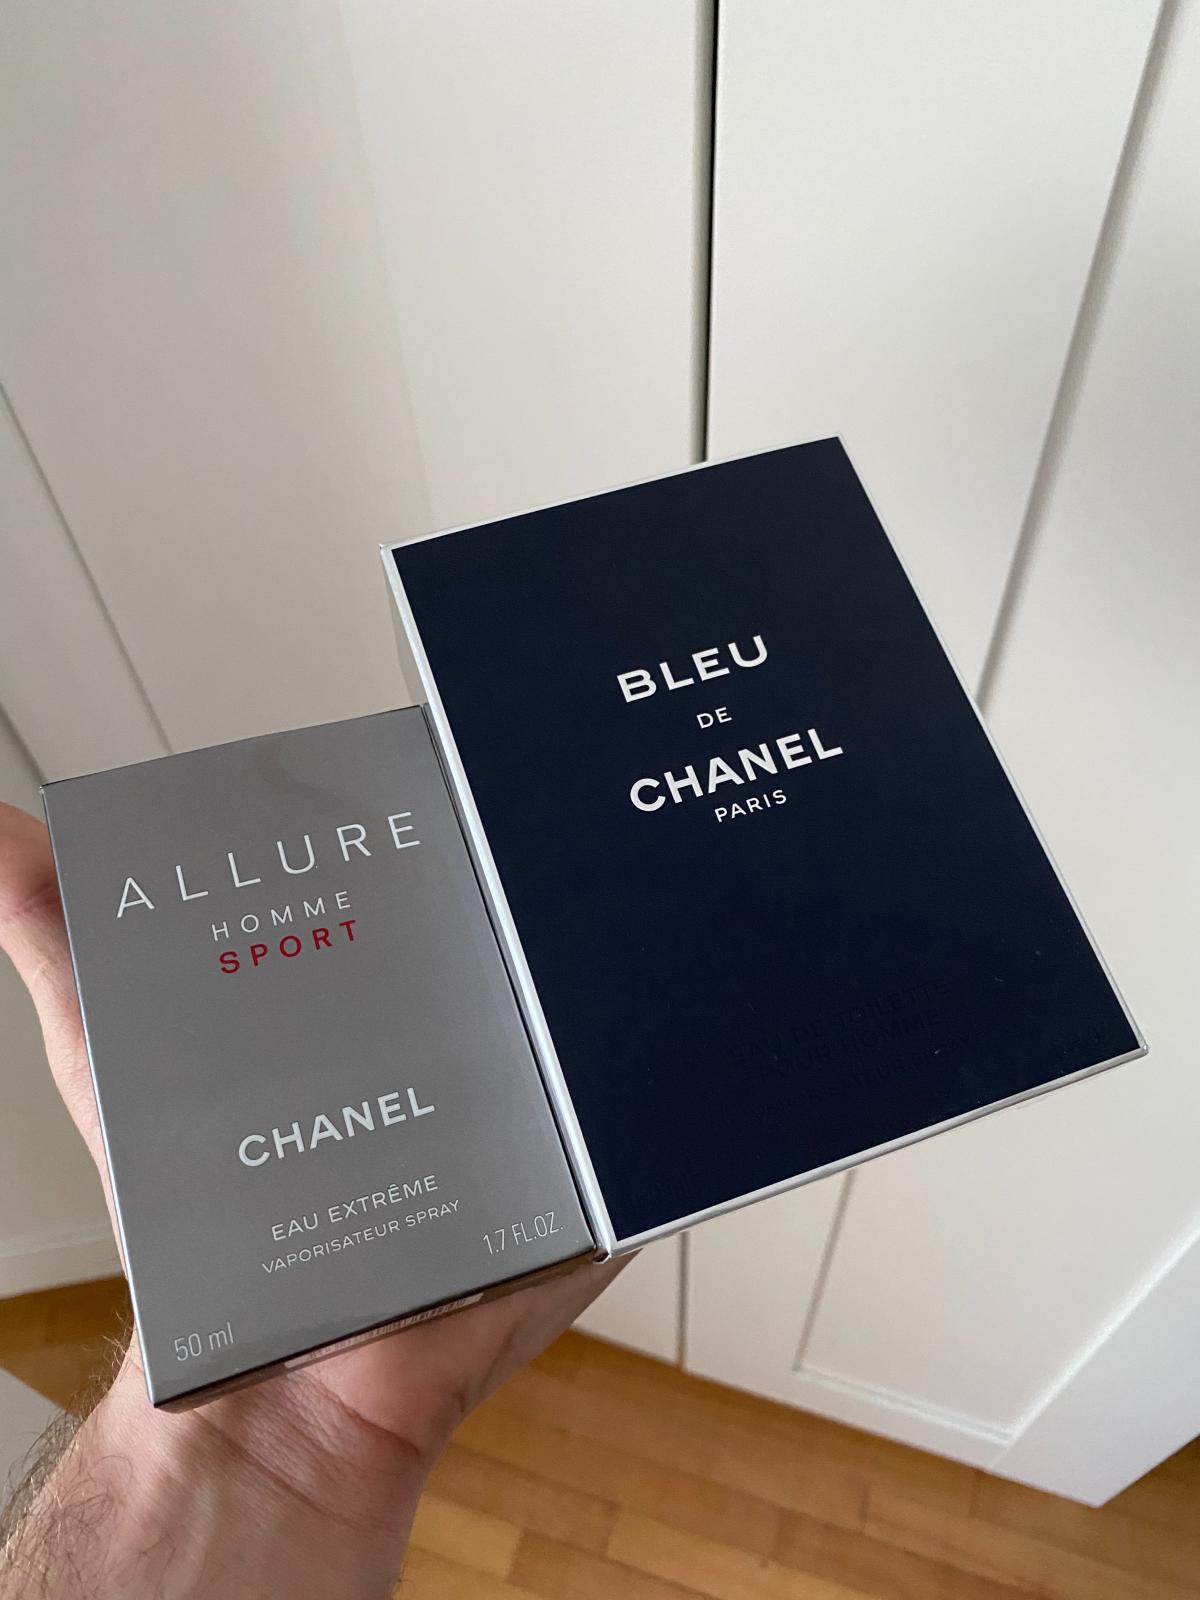 Allure Homme Sport Eau Extreme Chanel cologne - a fragrance for men 2012